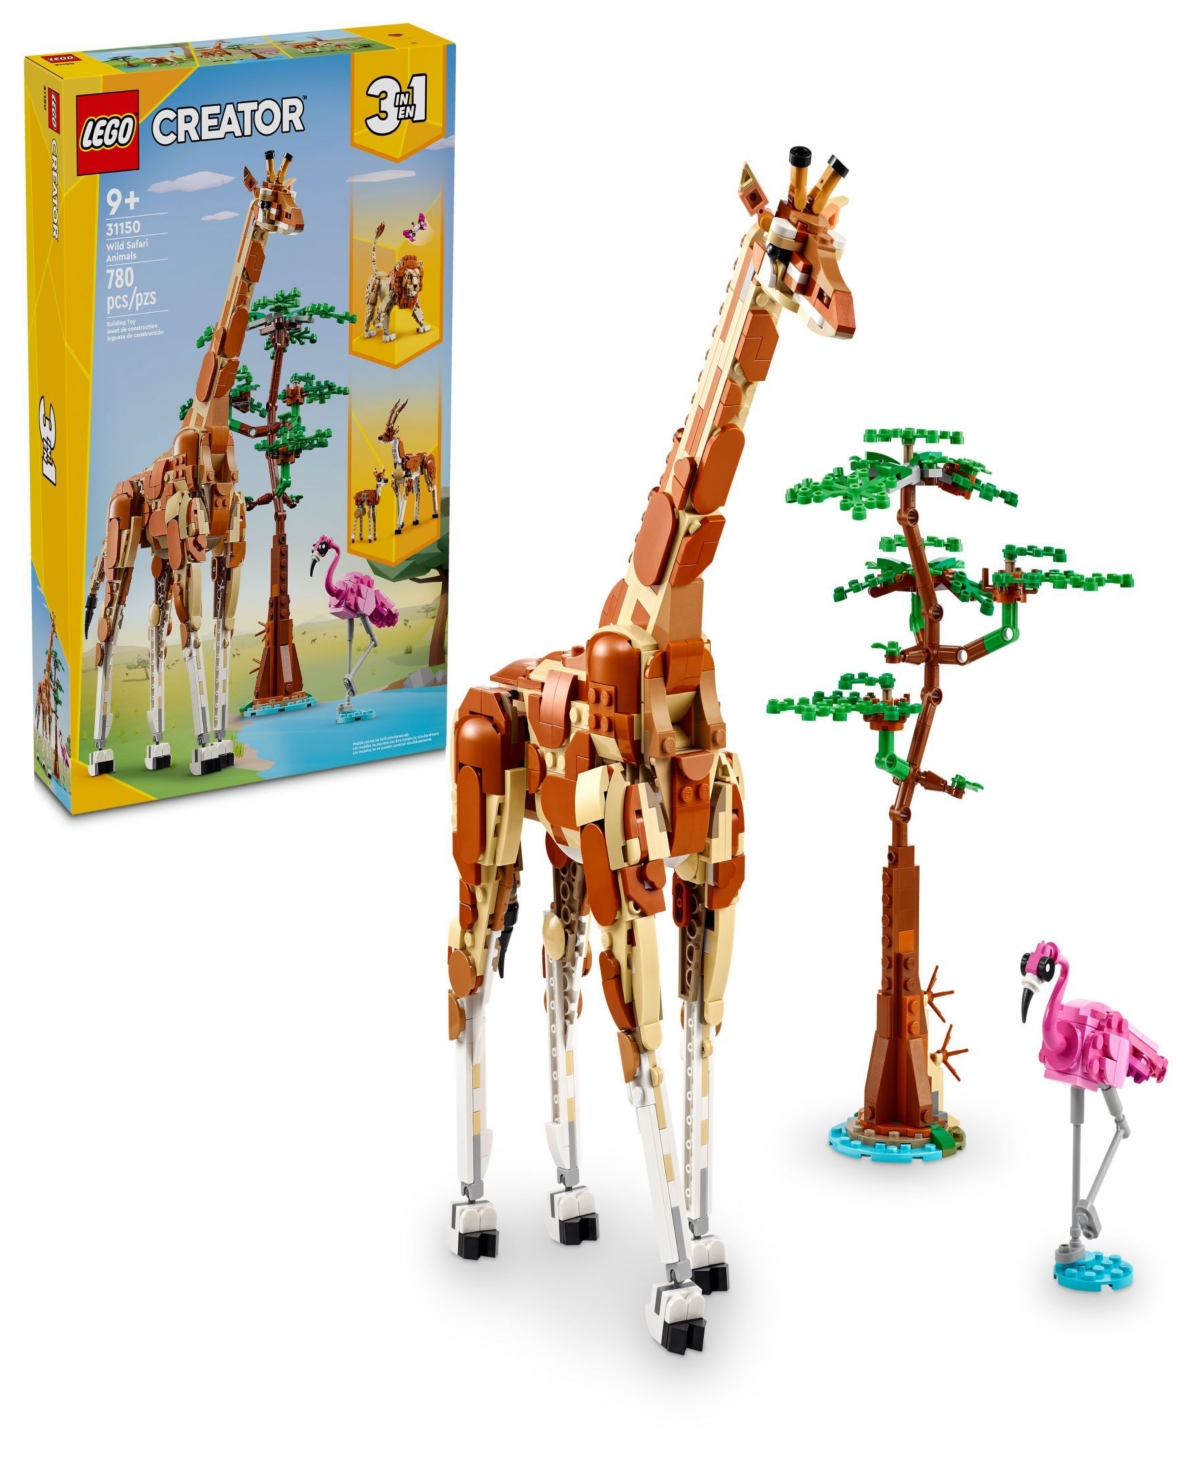 Lego Creator 3 In 1 Wild Safari Animals Set, Giraffe, Gazelles Or Lion Toy 31150, 780 Pieces In Multicolor